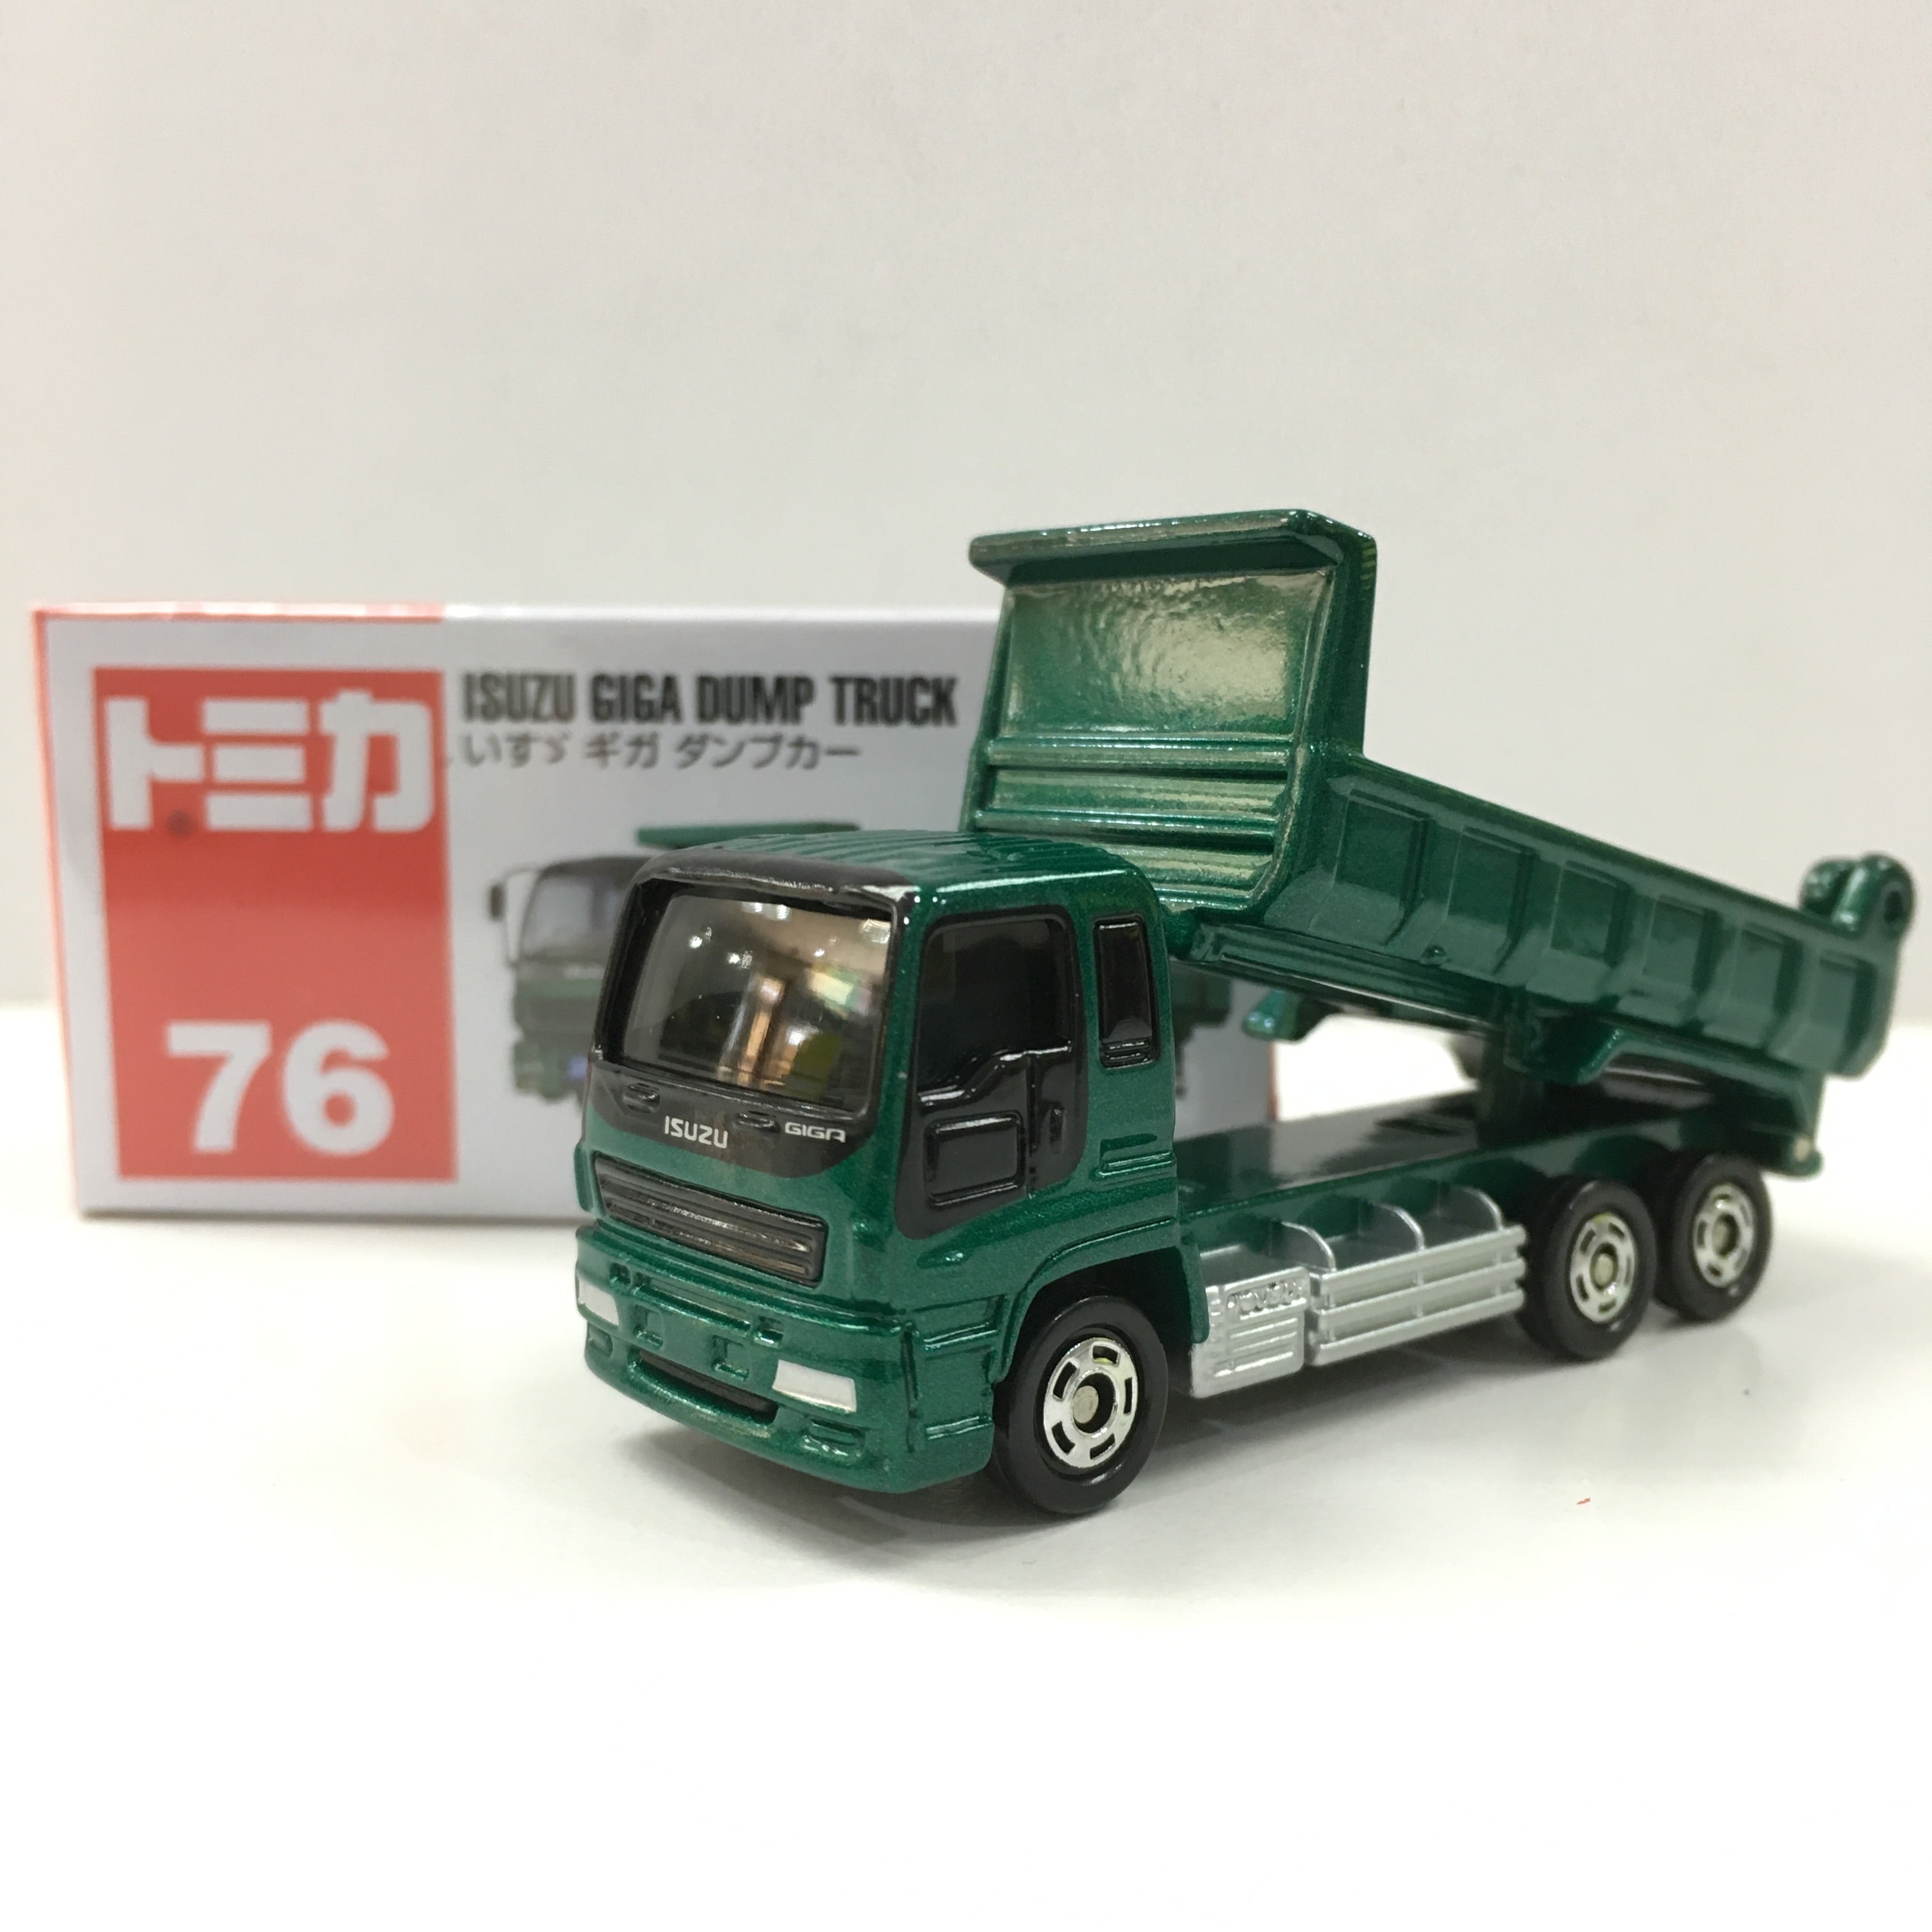 Tomica #76 Isuzu Giga Dump Truck